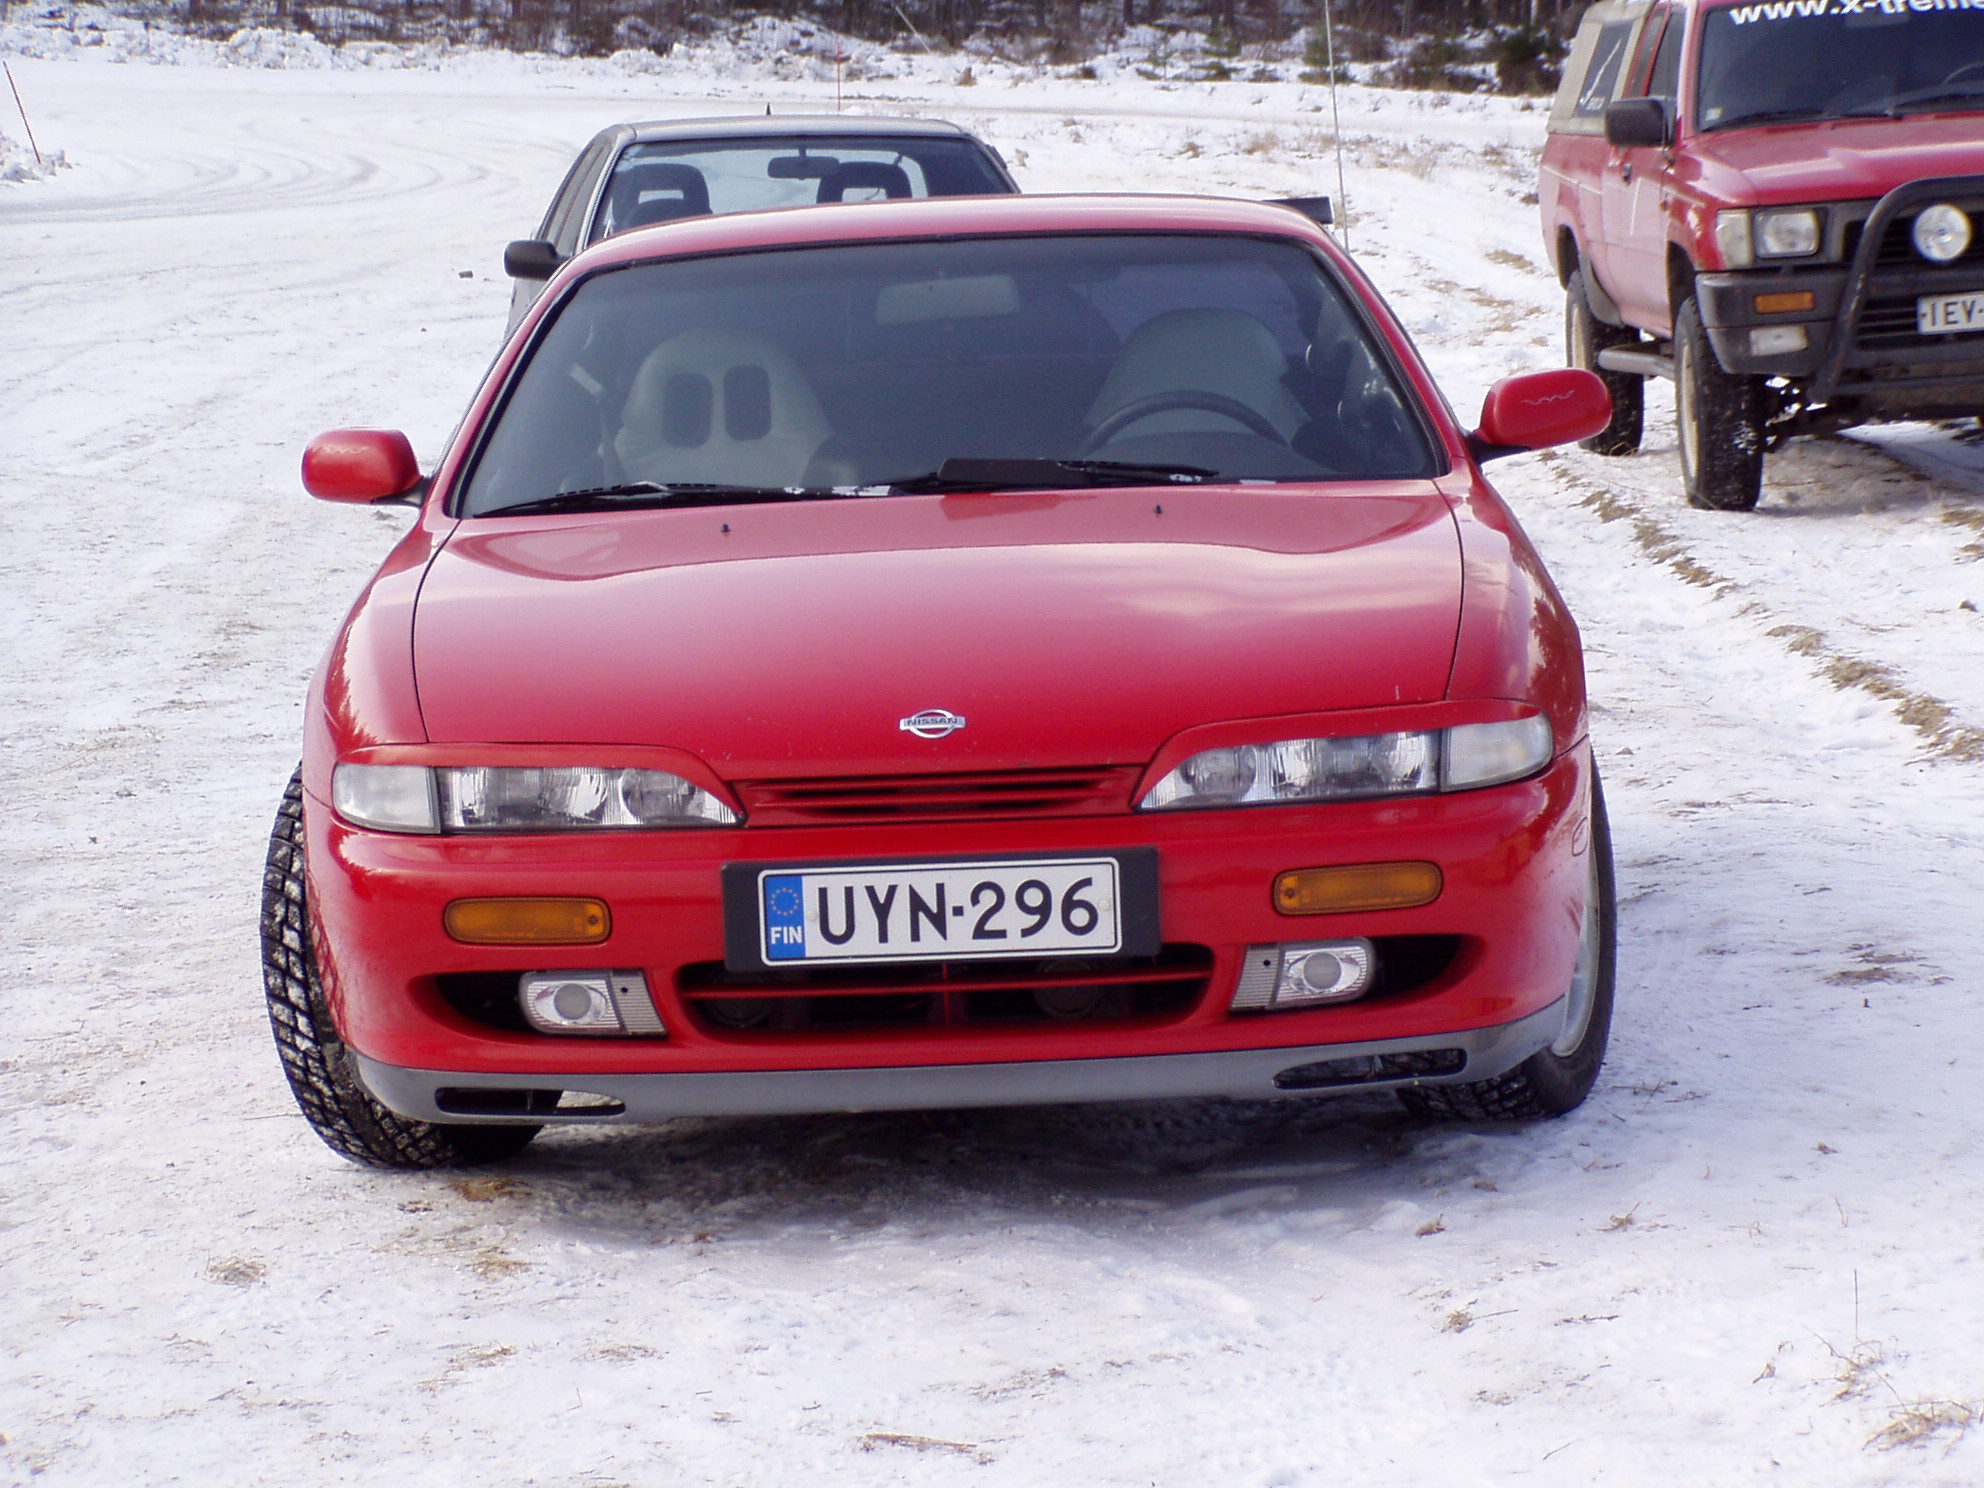 X-Treme talviajot 12.3.2005, Punainen Nissan